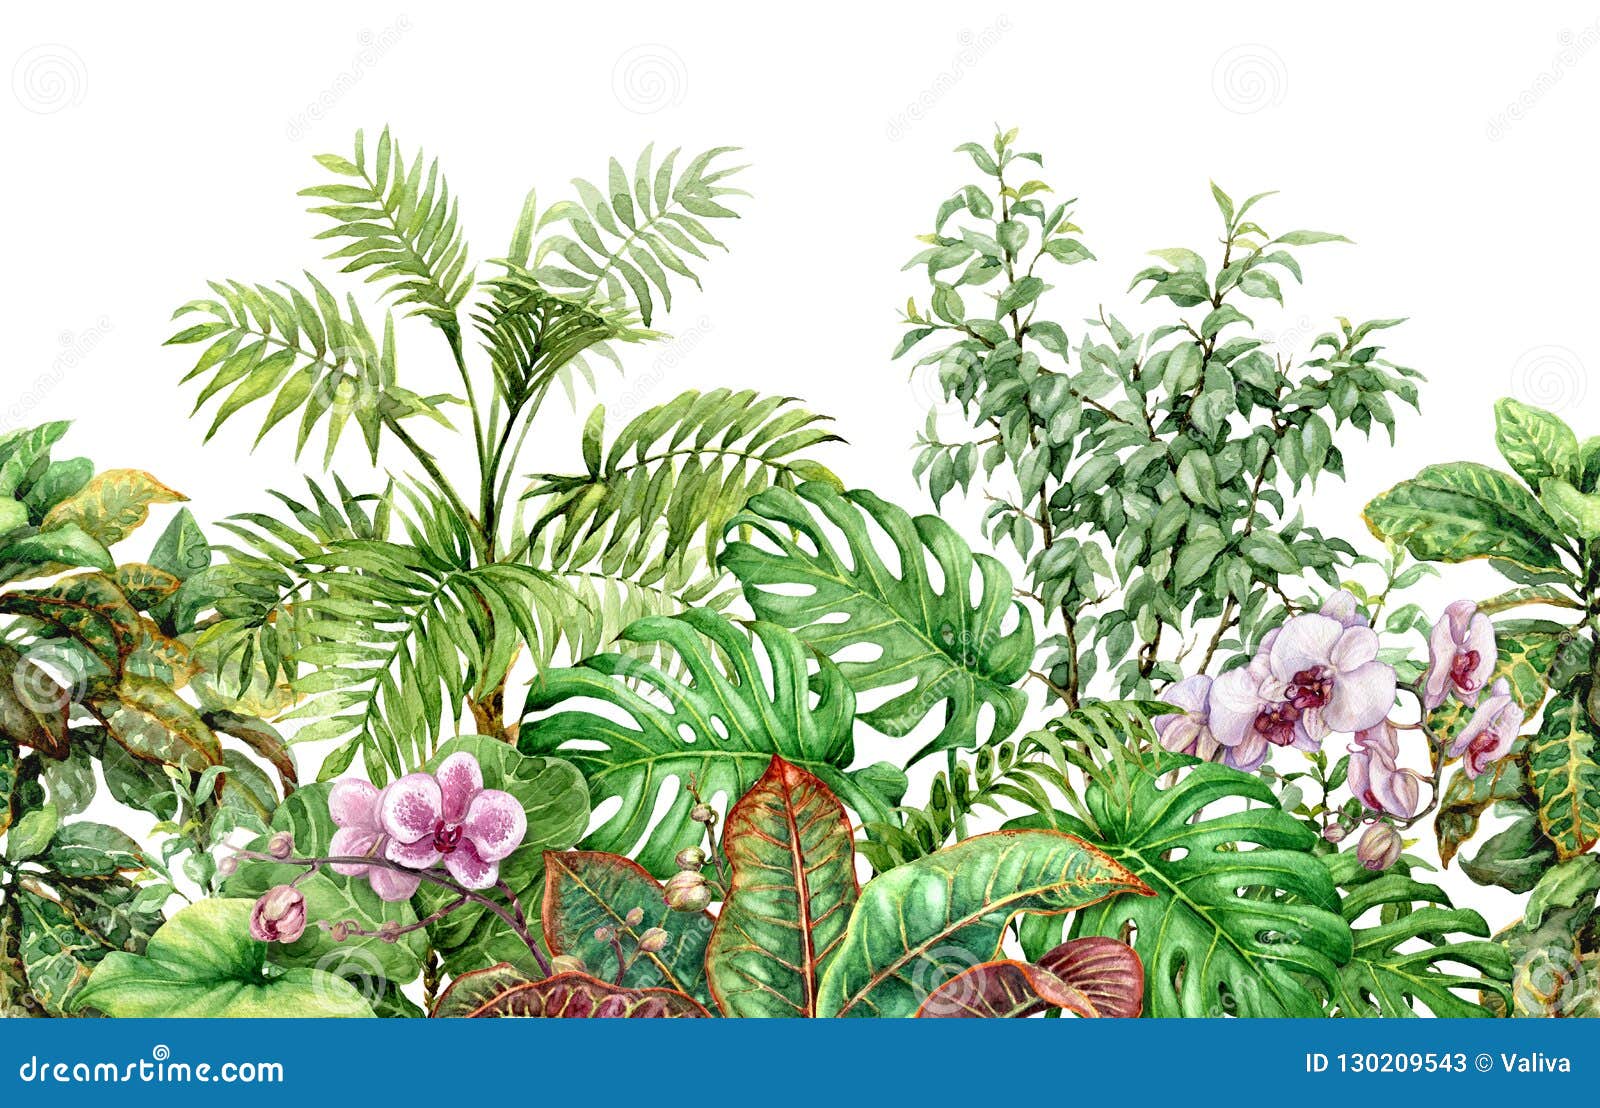 tropical plants line seamless pattern